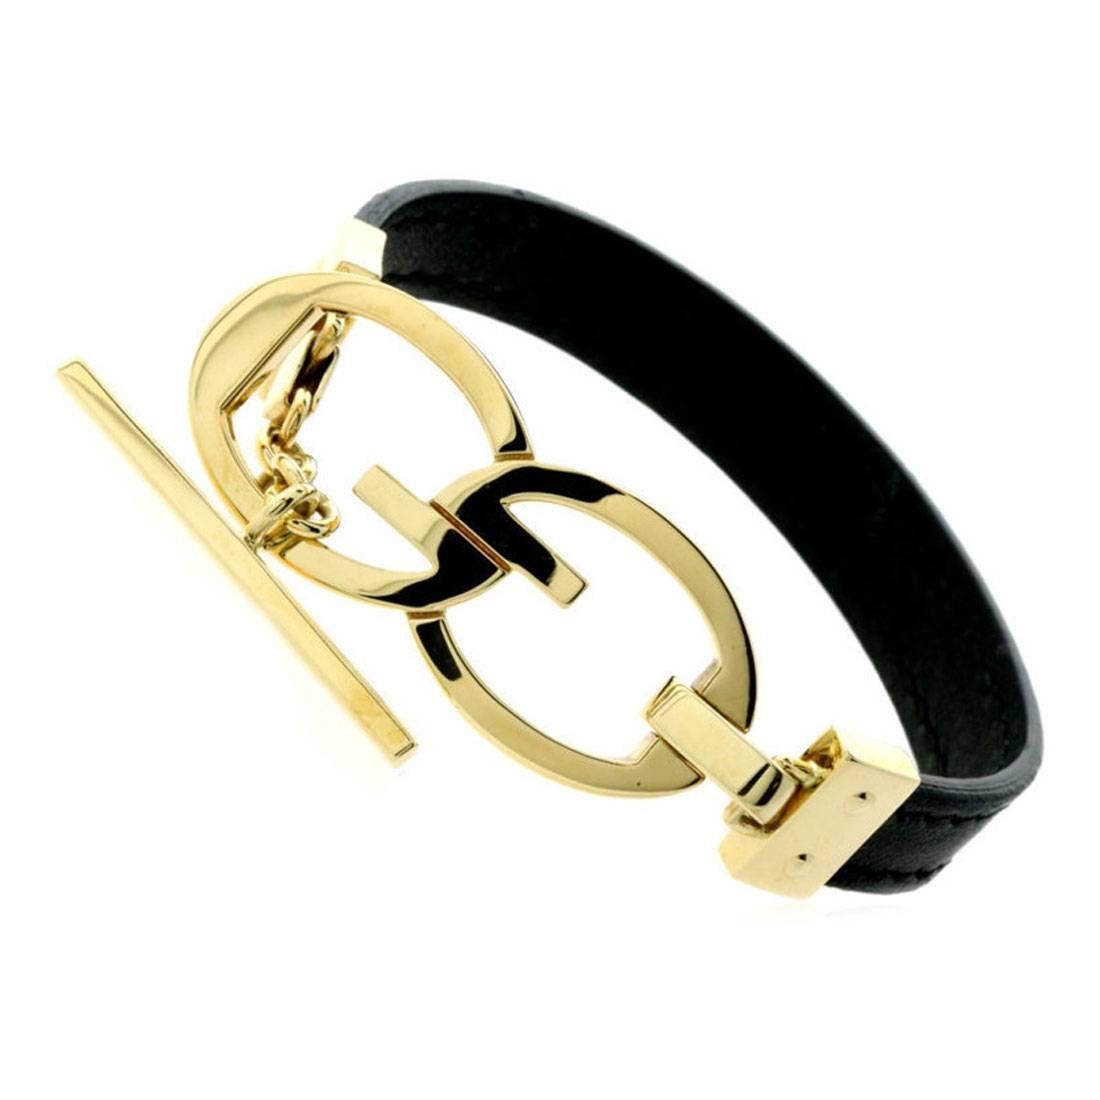 Gucci Leather Gold Toggle Bracelet